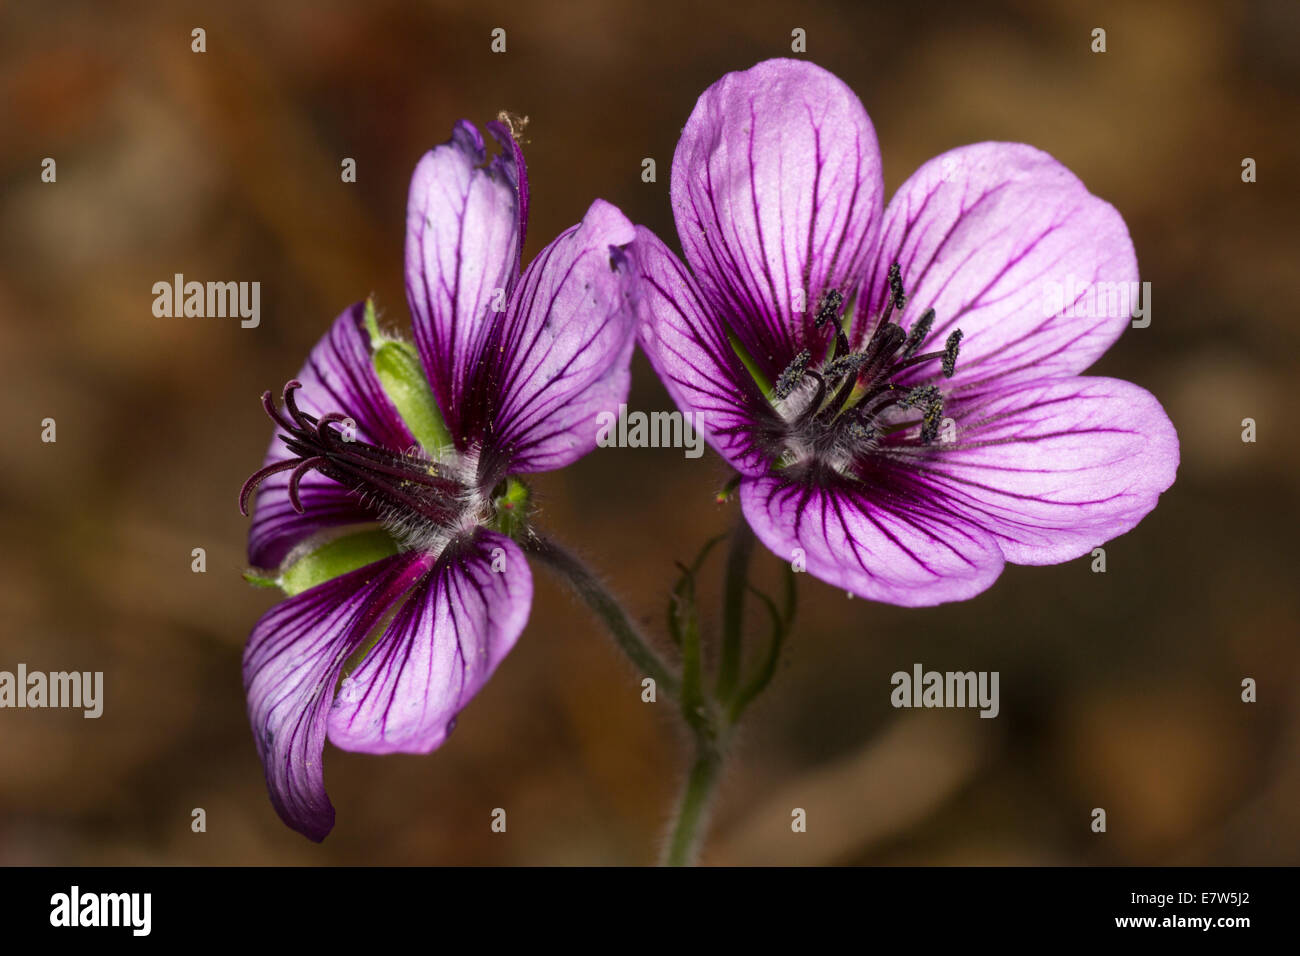 Twin flowers of the spreading hardy geranium, 'Salome' Stock Photo